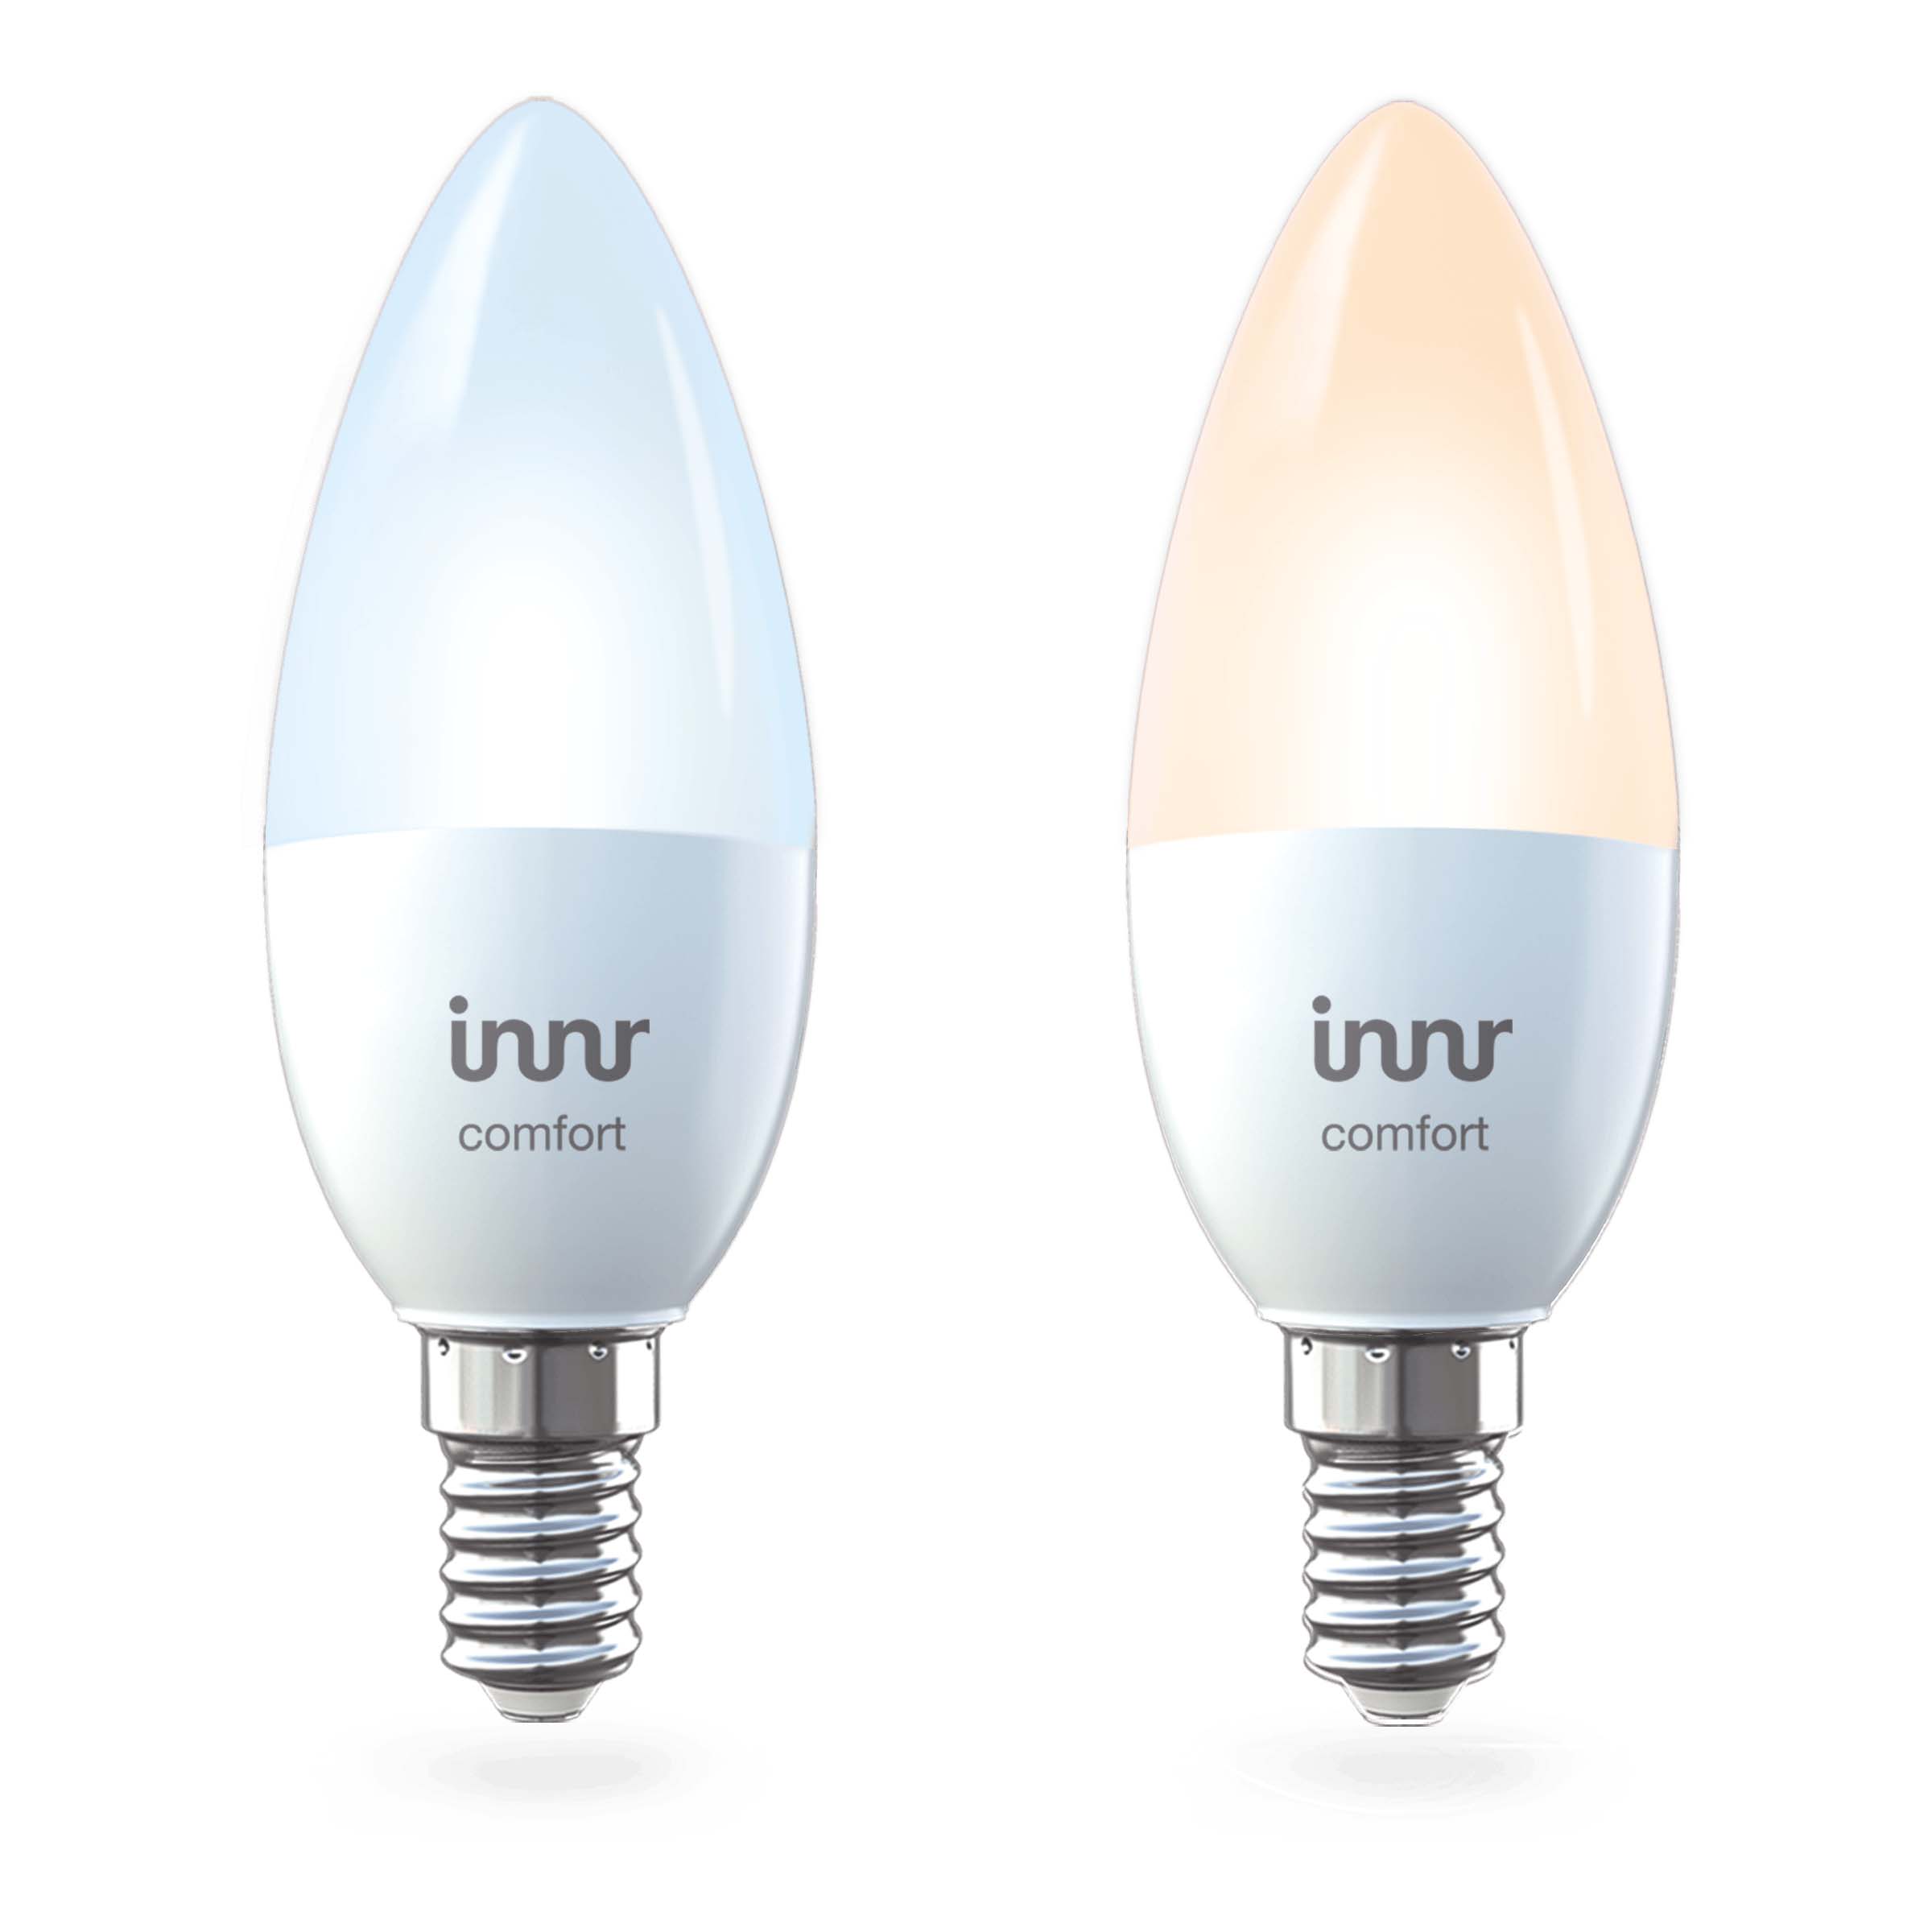 INNR RB 249 T-2 Chytrá LED žárovka E14 Comfort, tvar svíce, 2ks